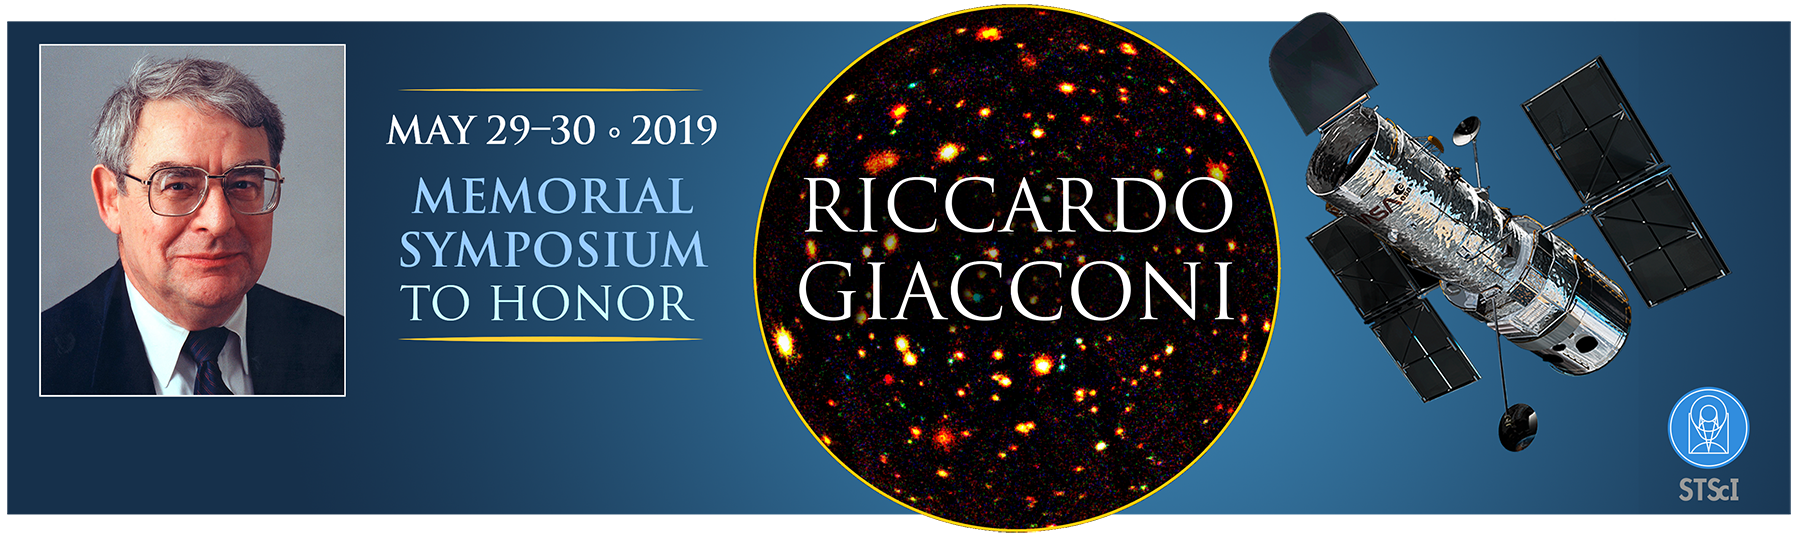 Memorial Symposium to Honor Riccardo Giacconi